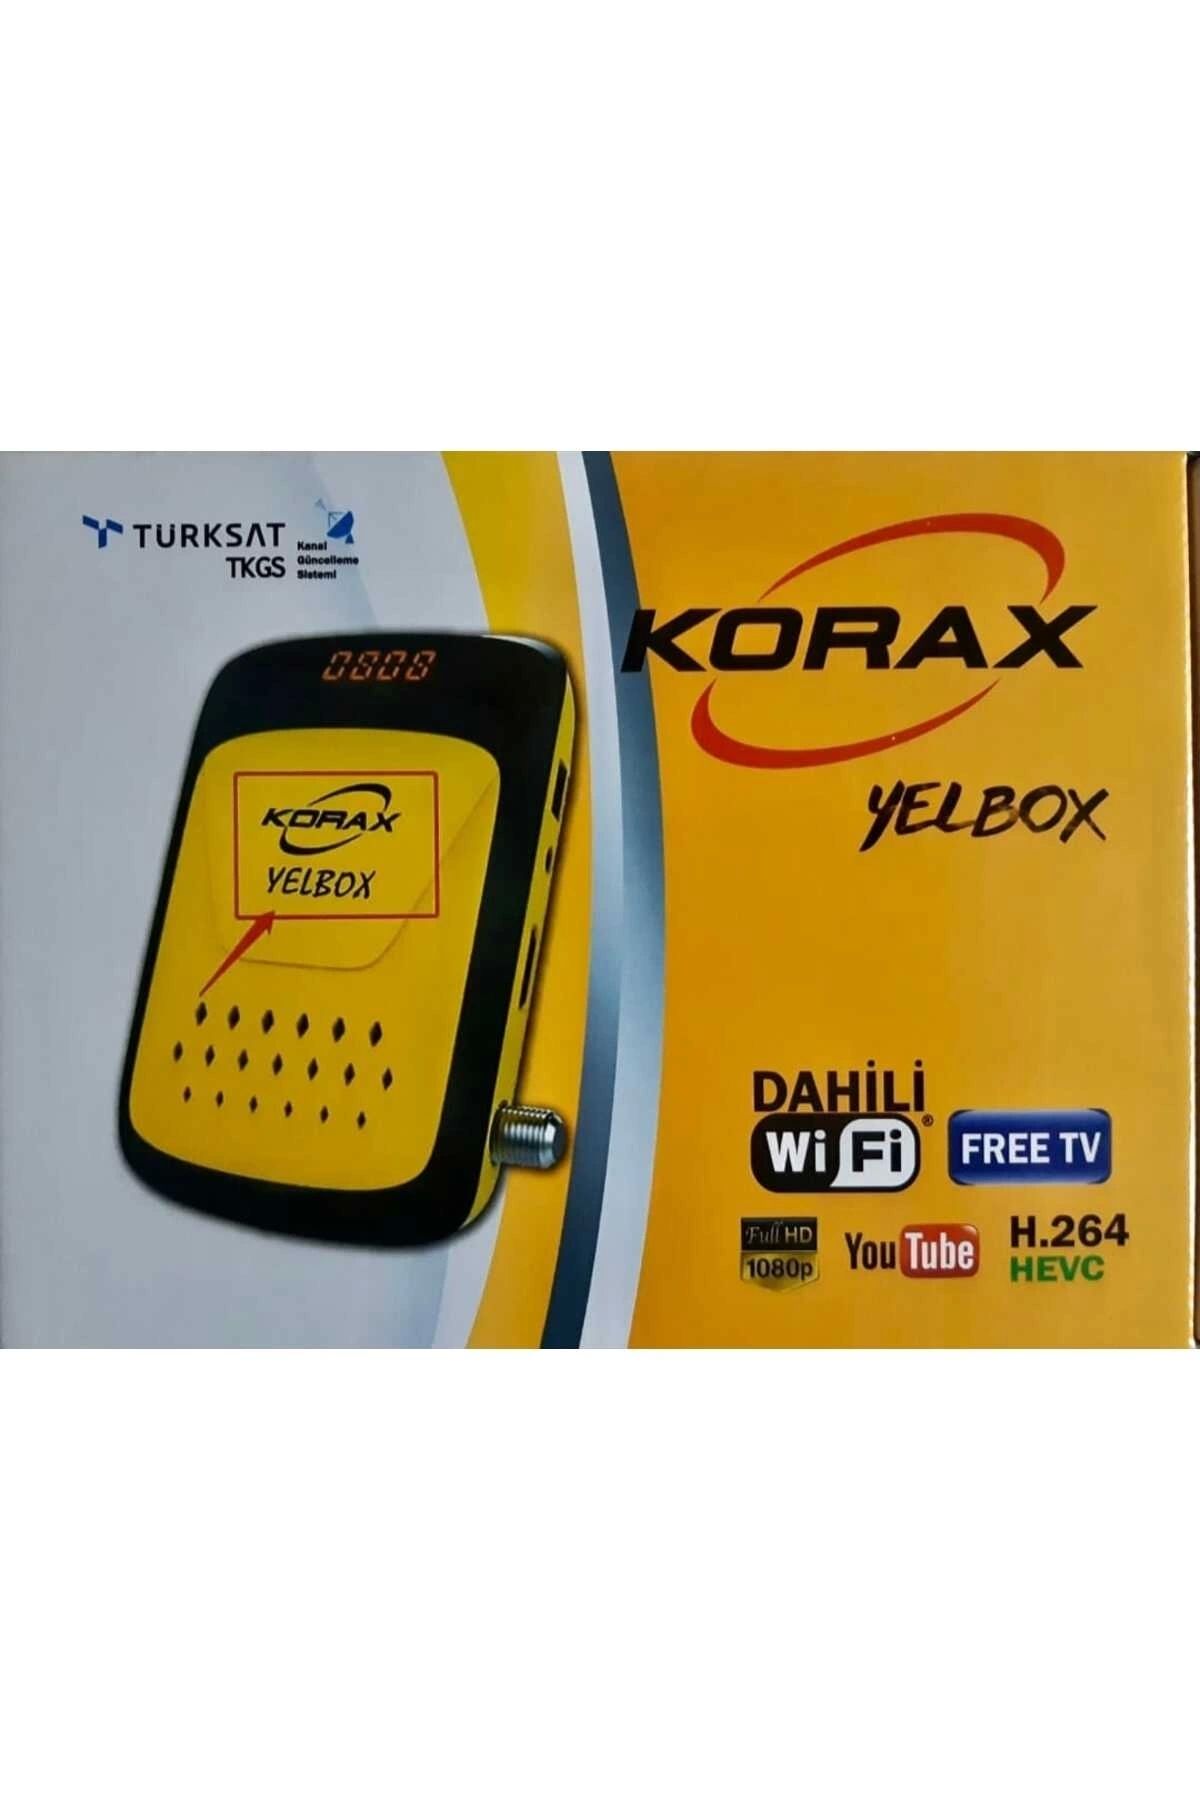 Korax Yelbox Dahili Wi-Fi YOUTUBE Free Tv Özellikli Uydu Alıcı TV BOX